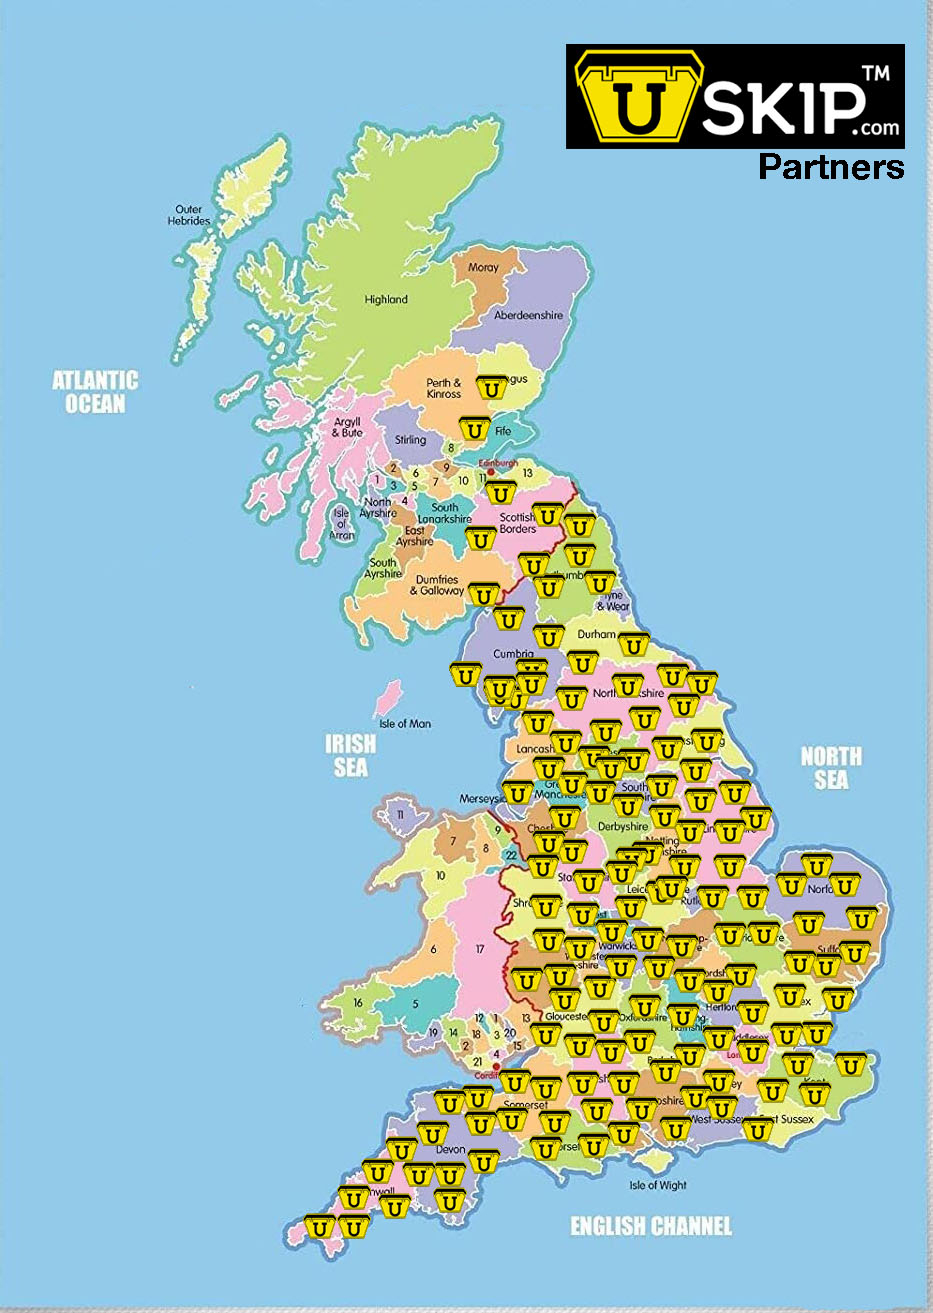 UK-LOCATIONS-MAP_USKIP